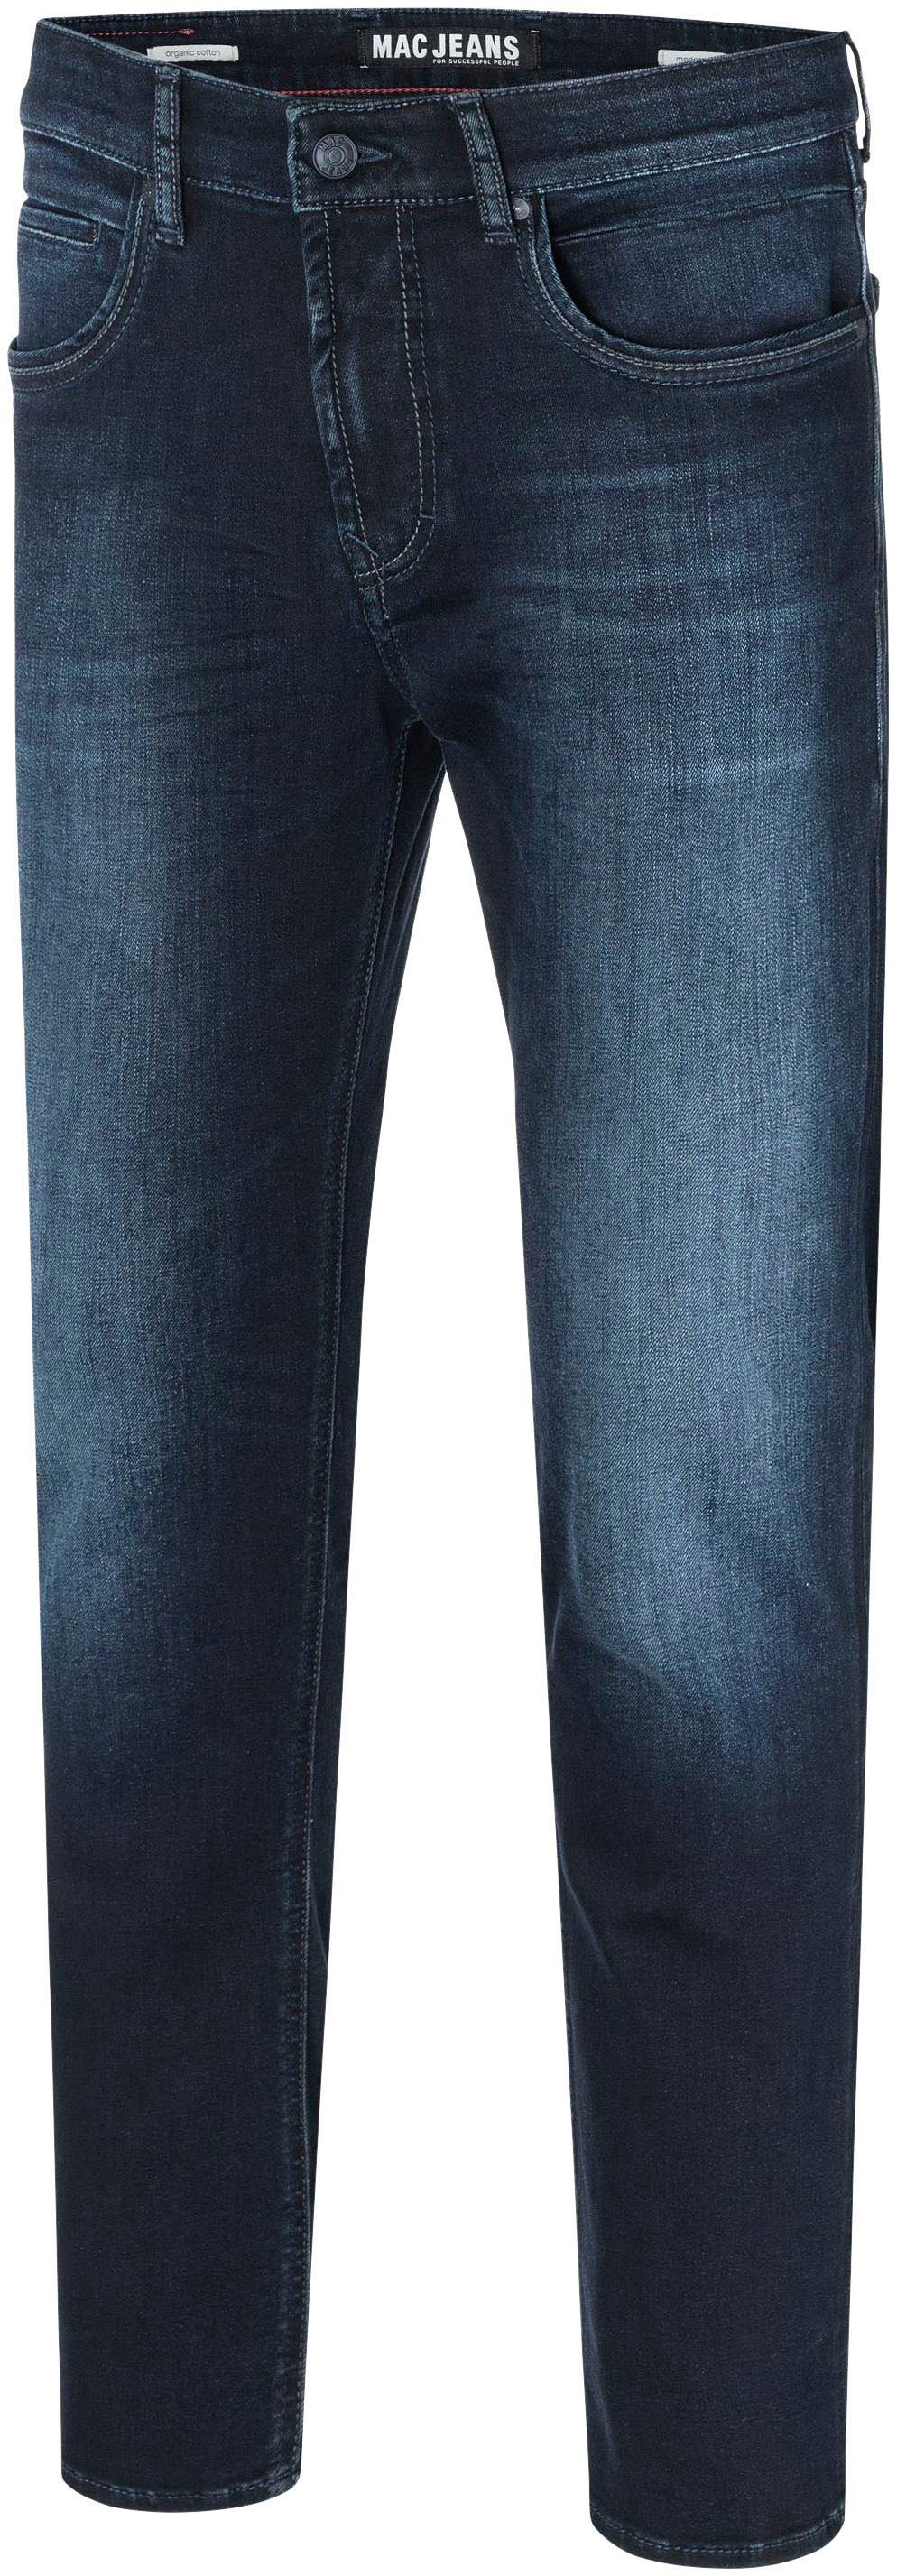 Pipe Arne Straight-Jeans blue-black MAC